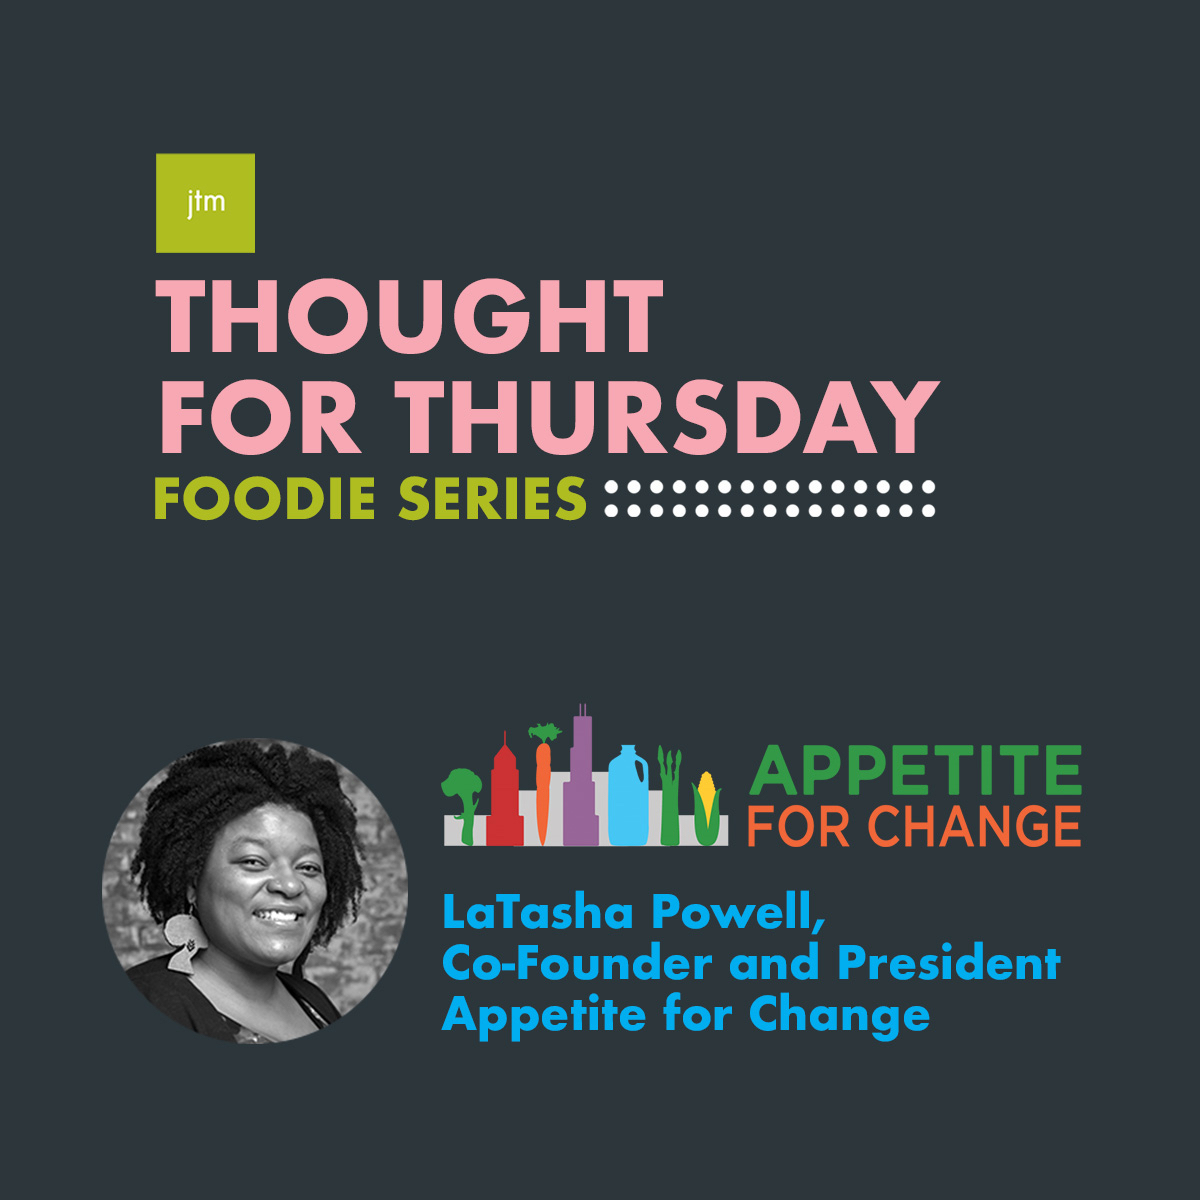 Appetite for Change LaTasha Powell